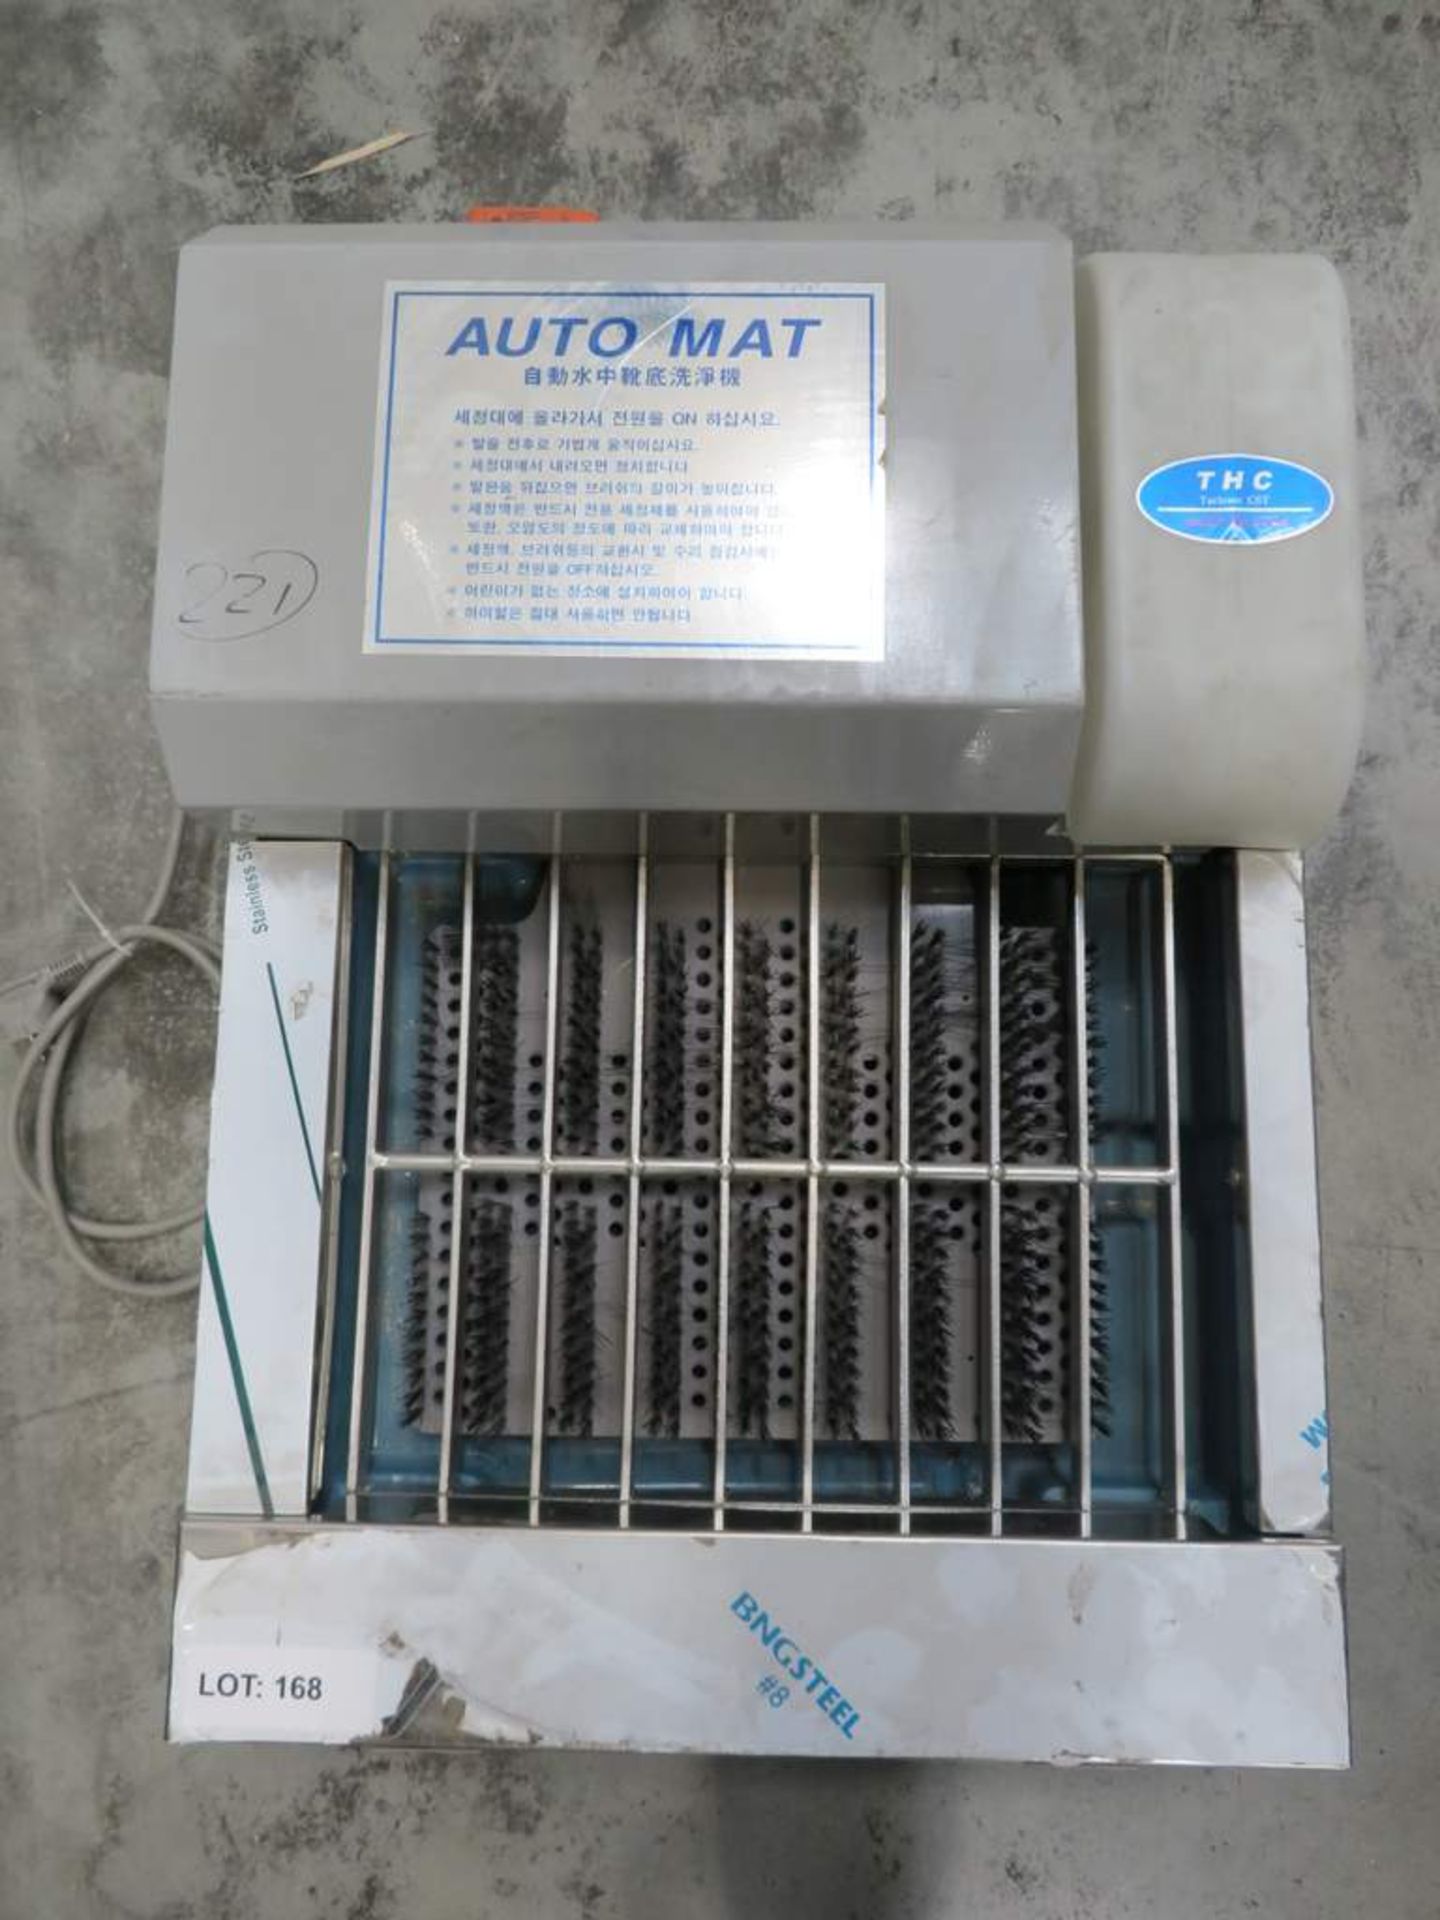 THC Auto mat boot washing unit. Model: GS-303H